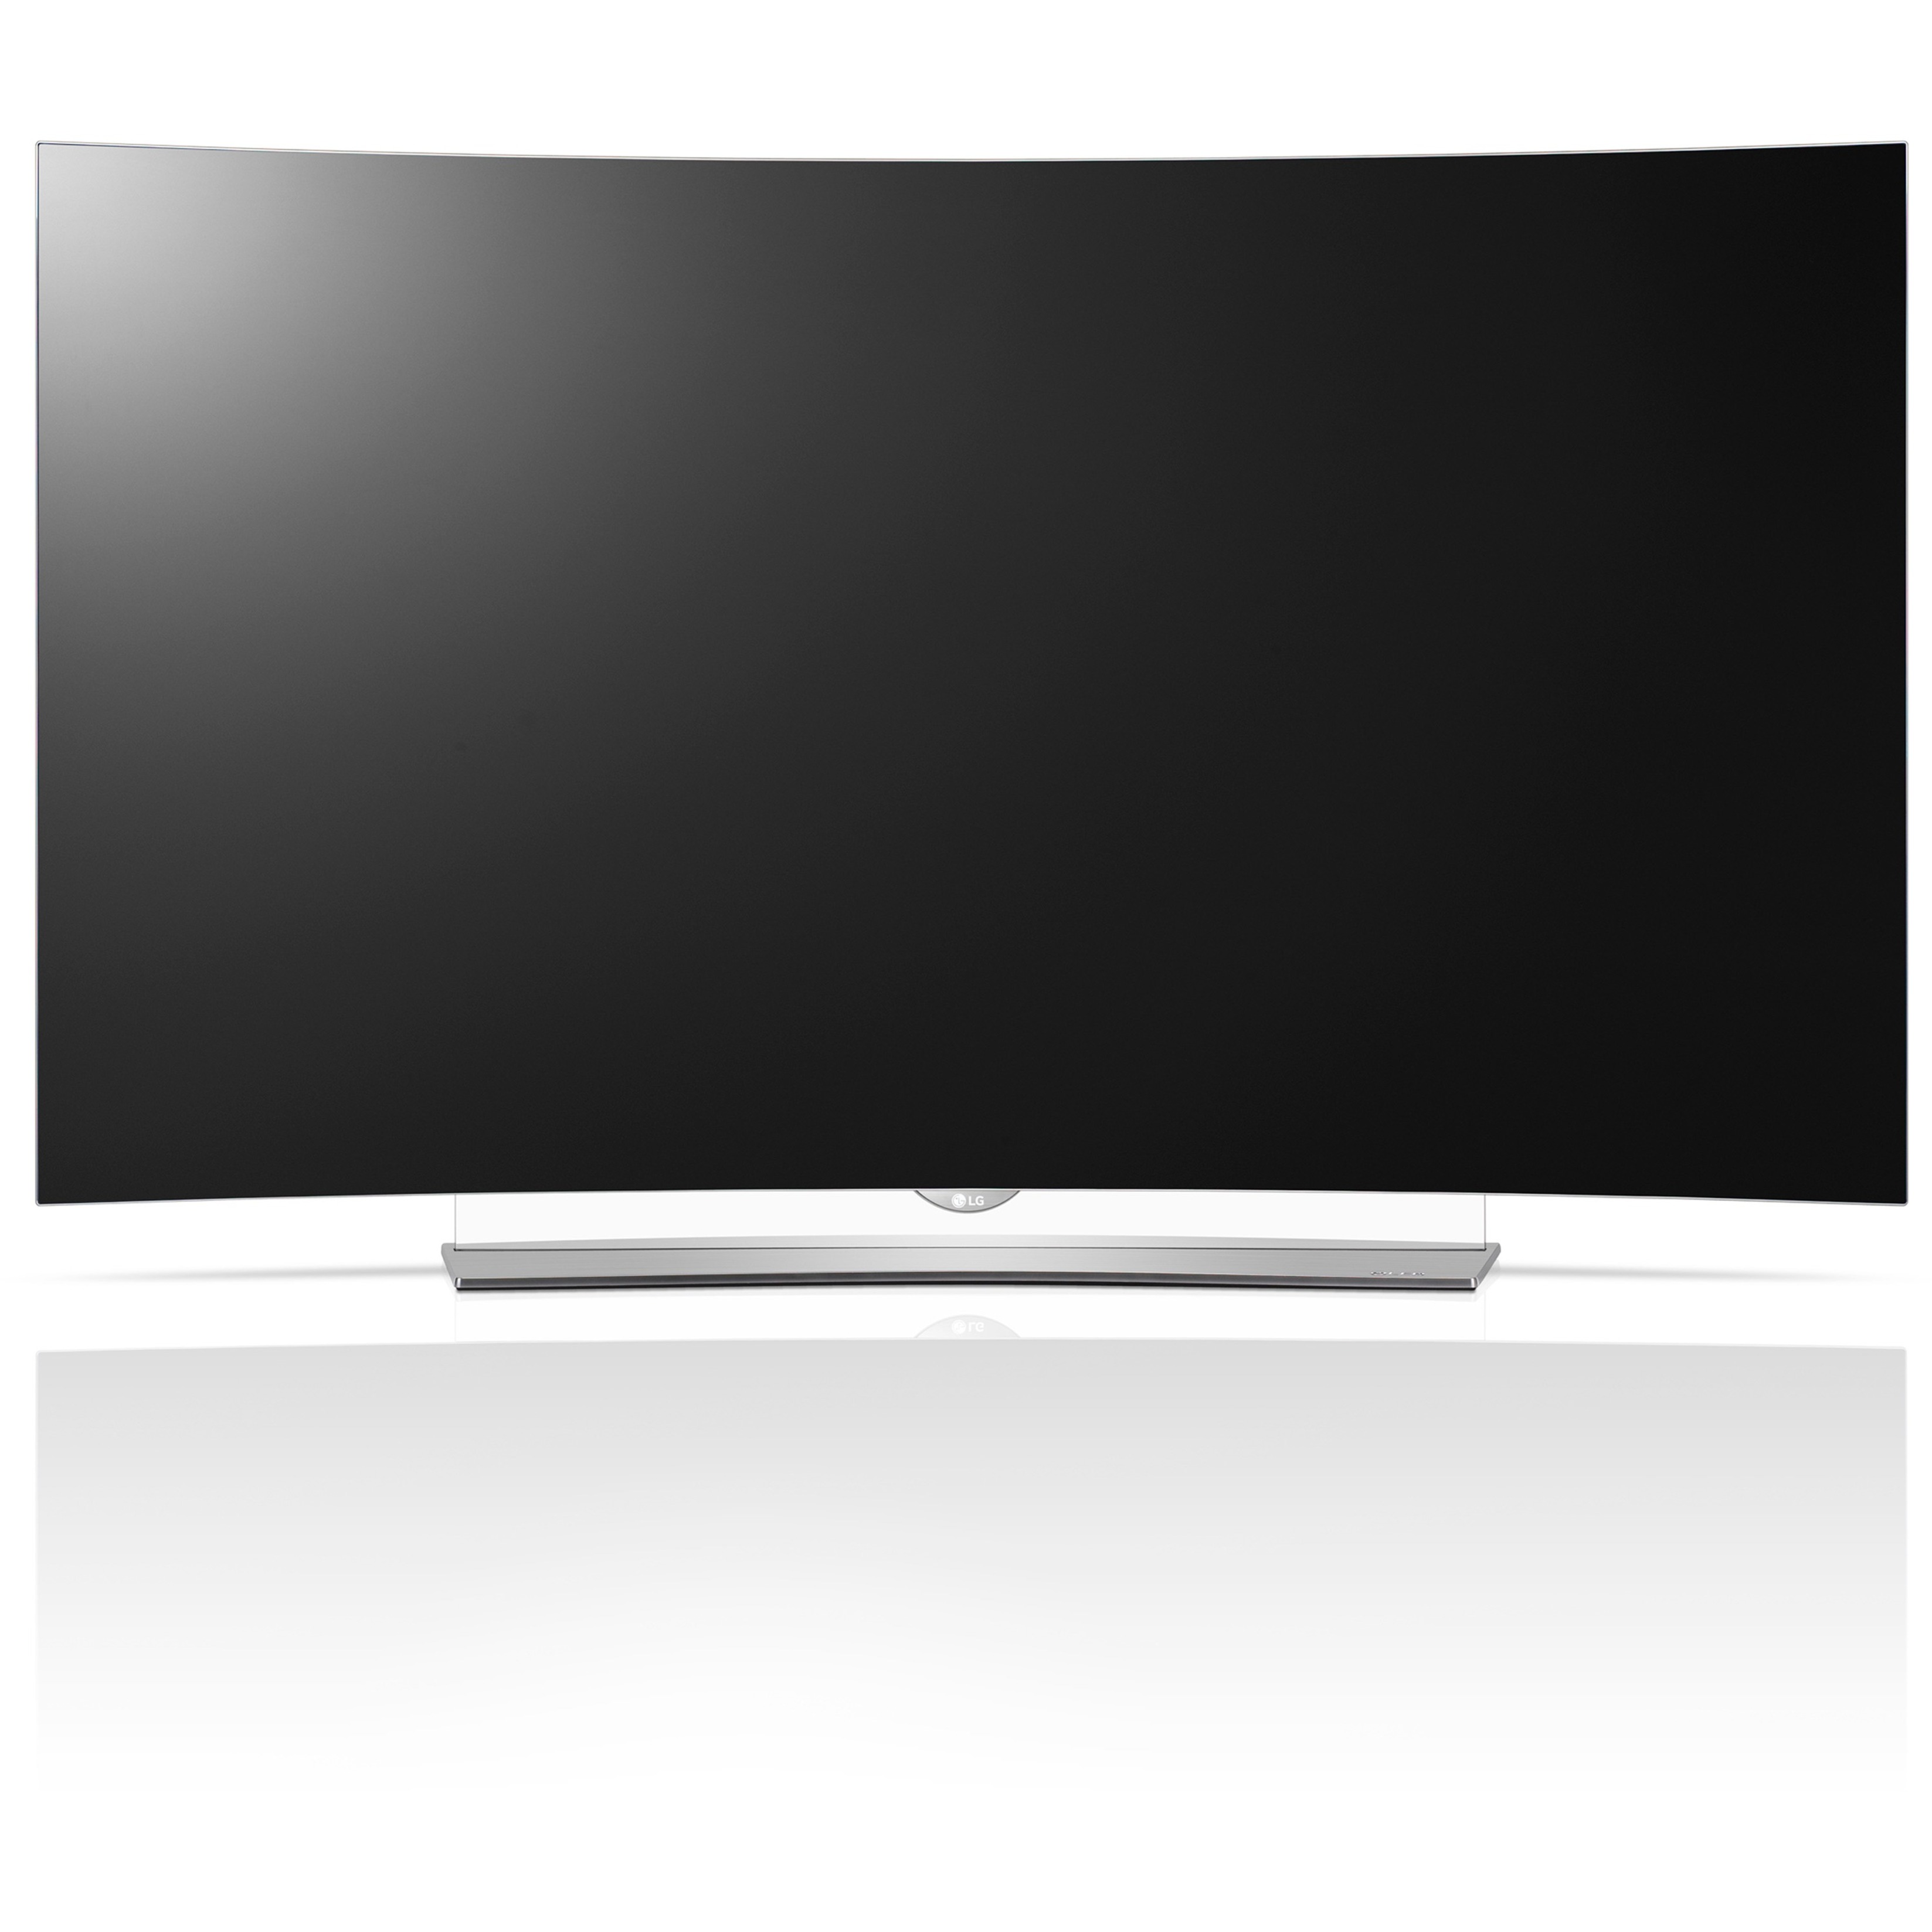 LG 55" Class 4K UHDTV (2160p) Smart OLED TV (55EG9600) - image 1 of 7